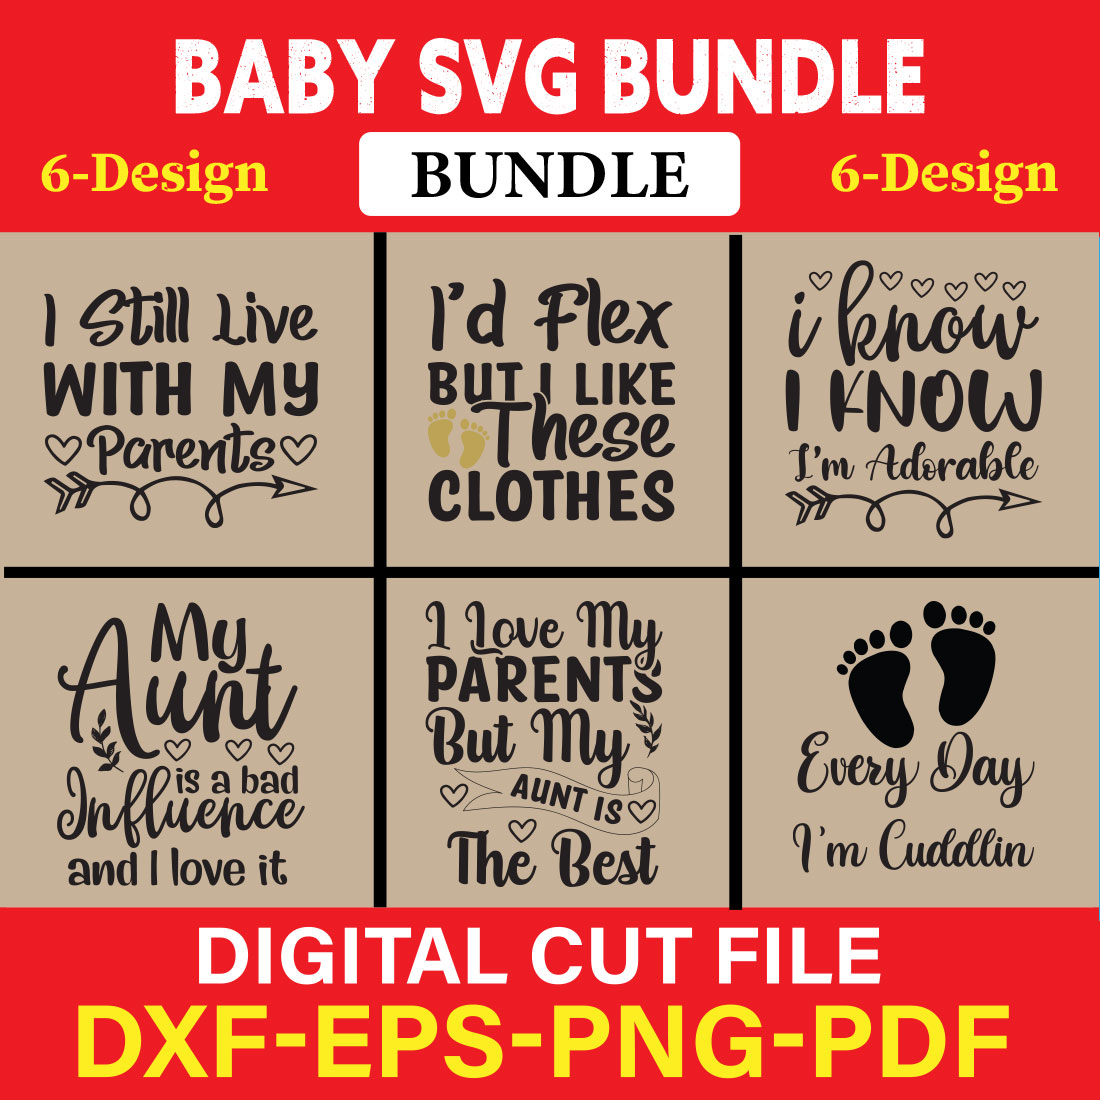 Baby SVG Bundle - Baby Girl Bundle Vol-02 cover image.